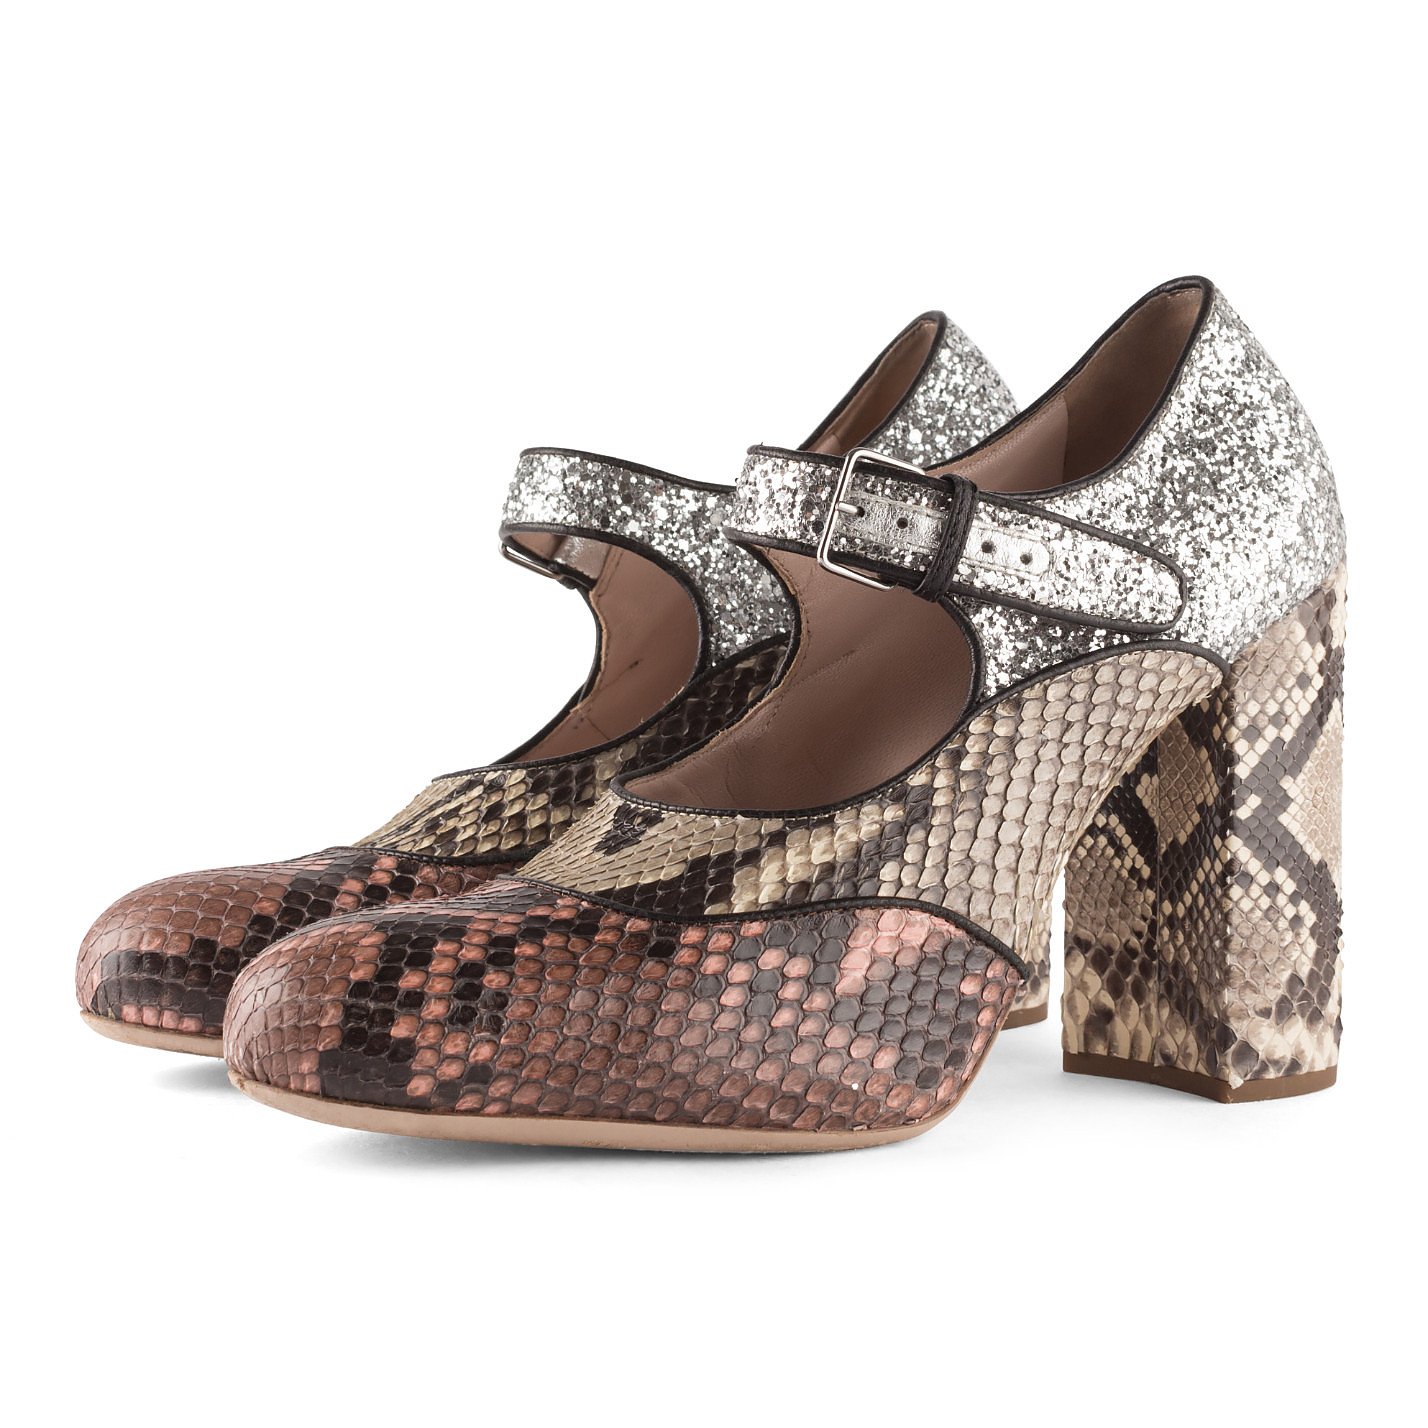 Miu Miu Snakeskin and Glitter Shoes 